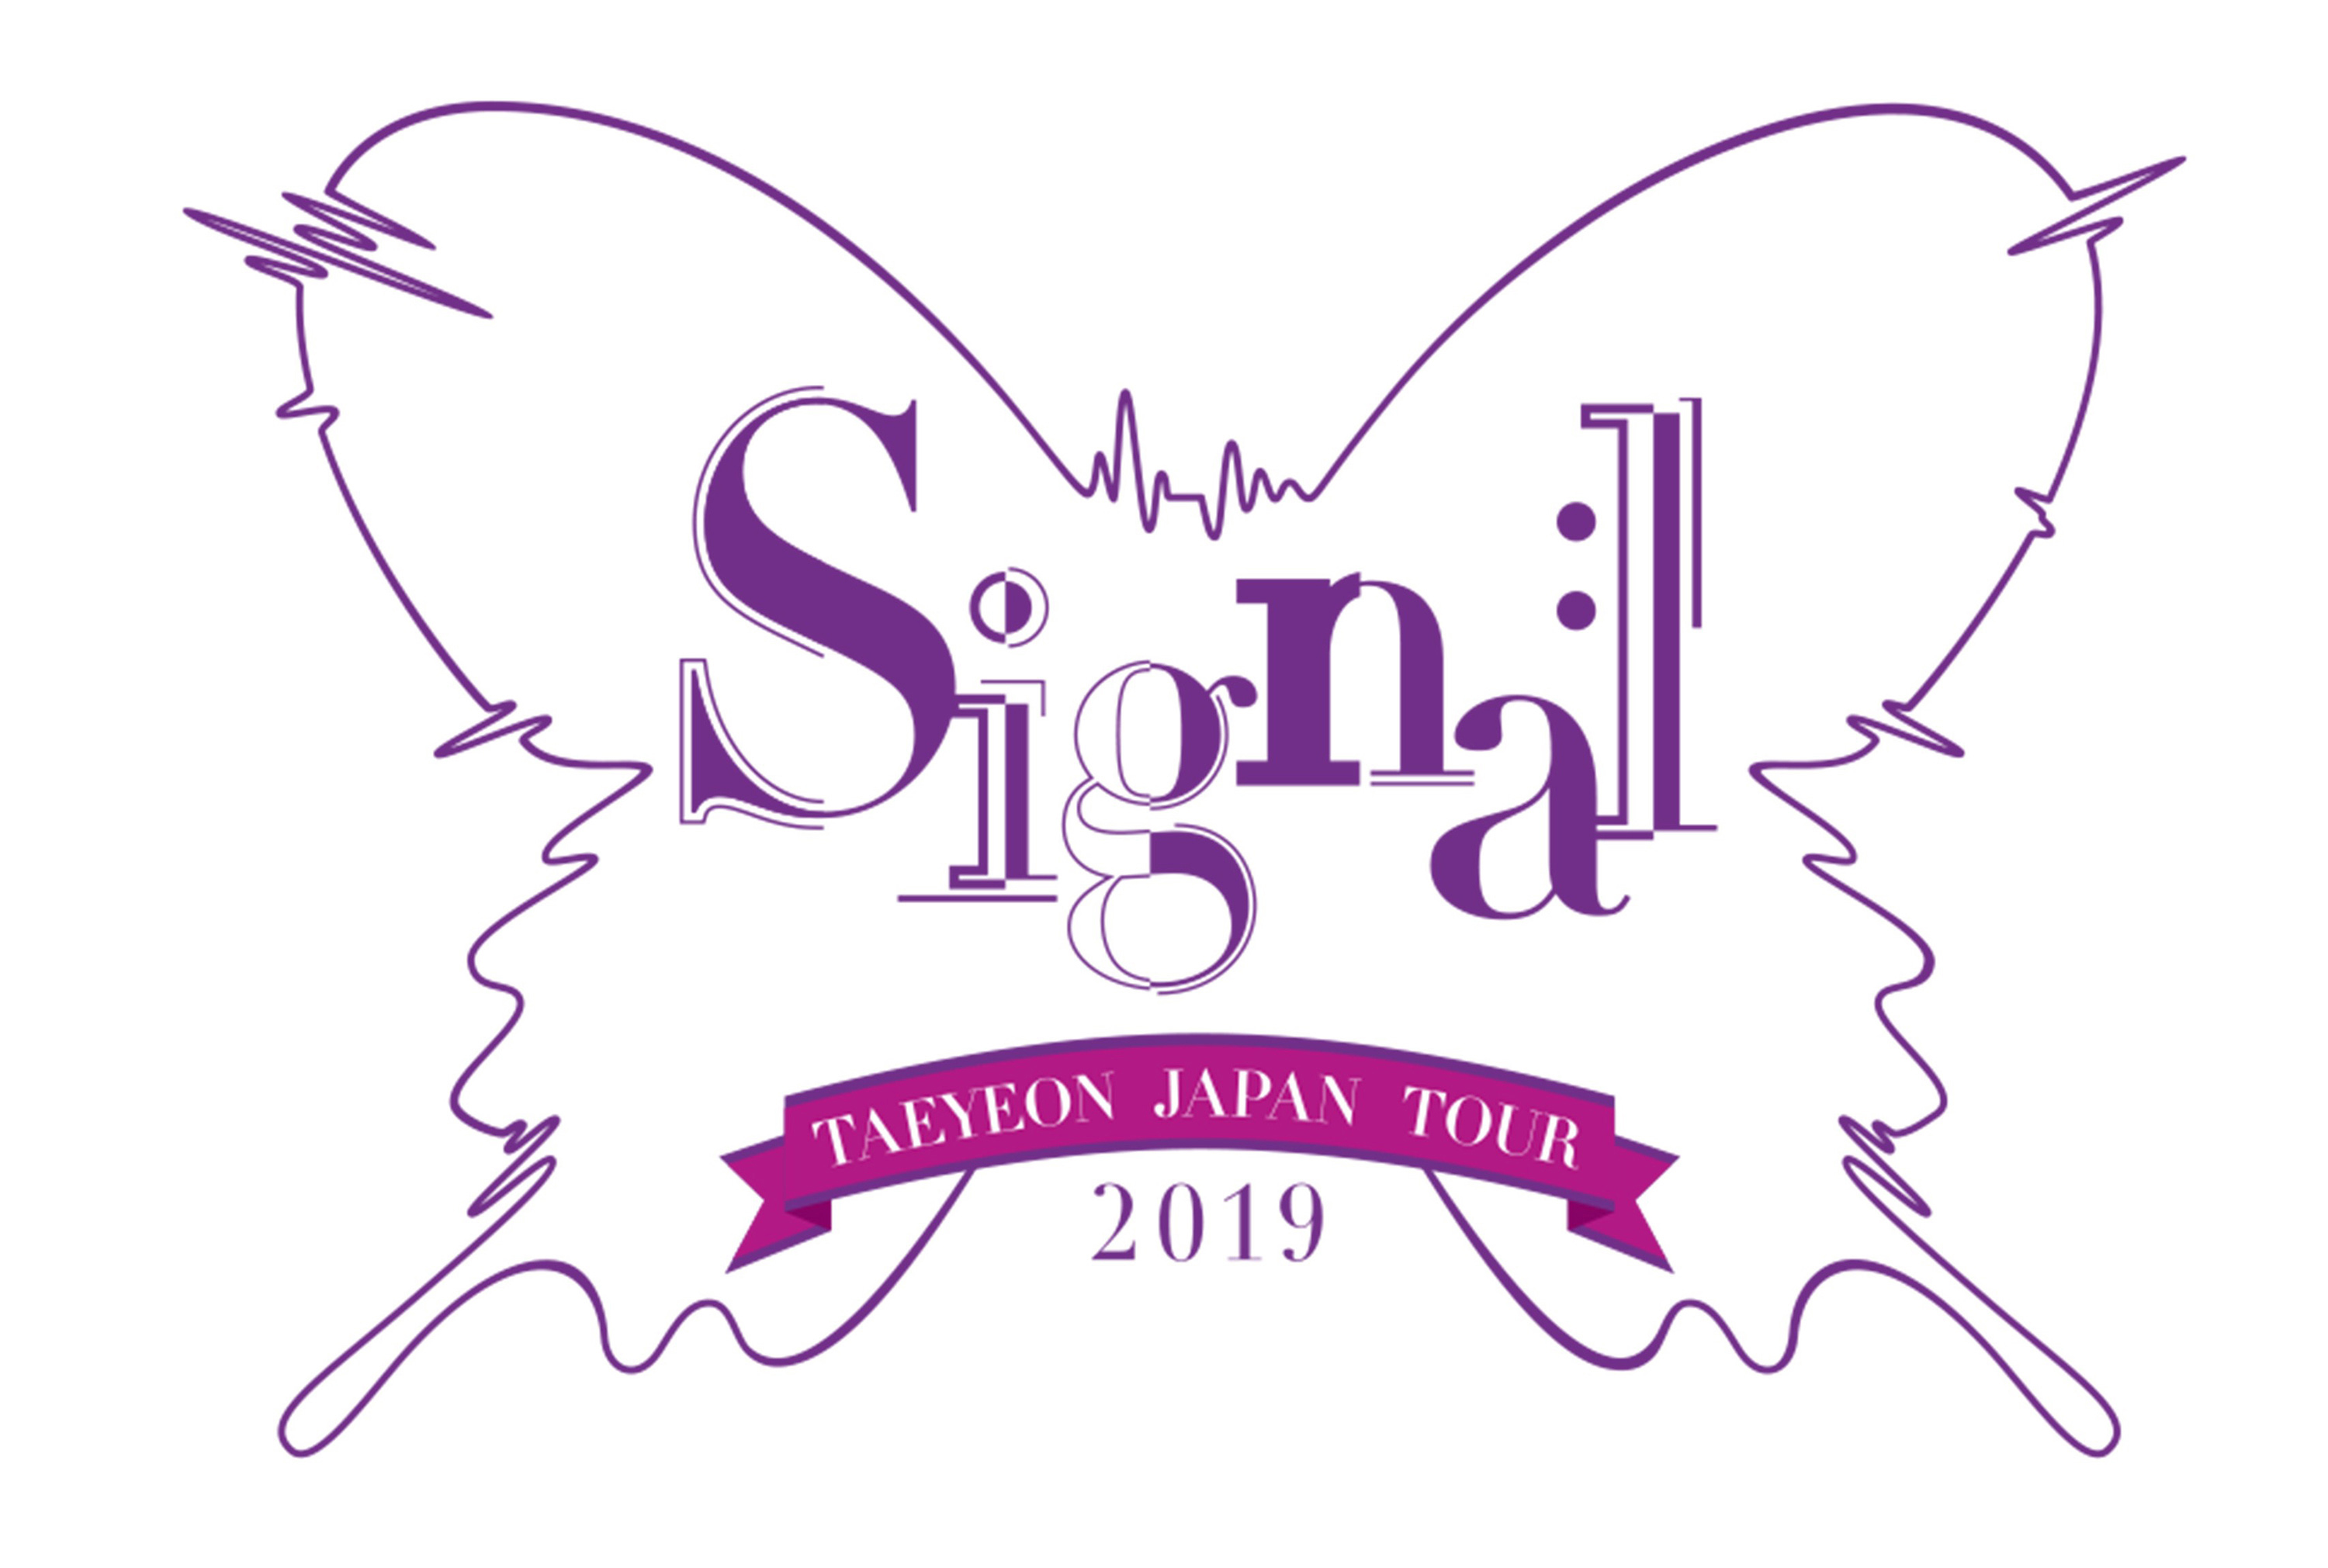 ‘TAEYEON JAPAN TOUR 2019 _Signal_’ 로고 이미지.jpg